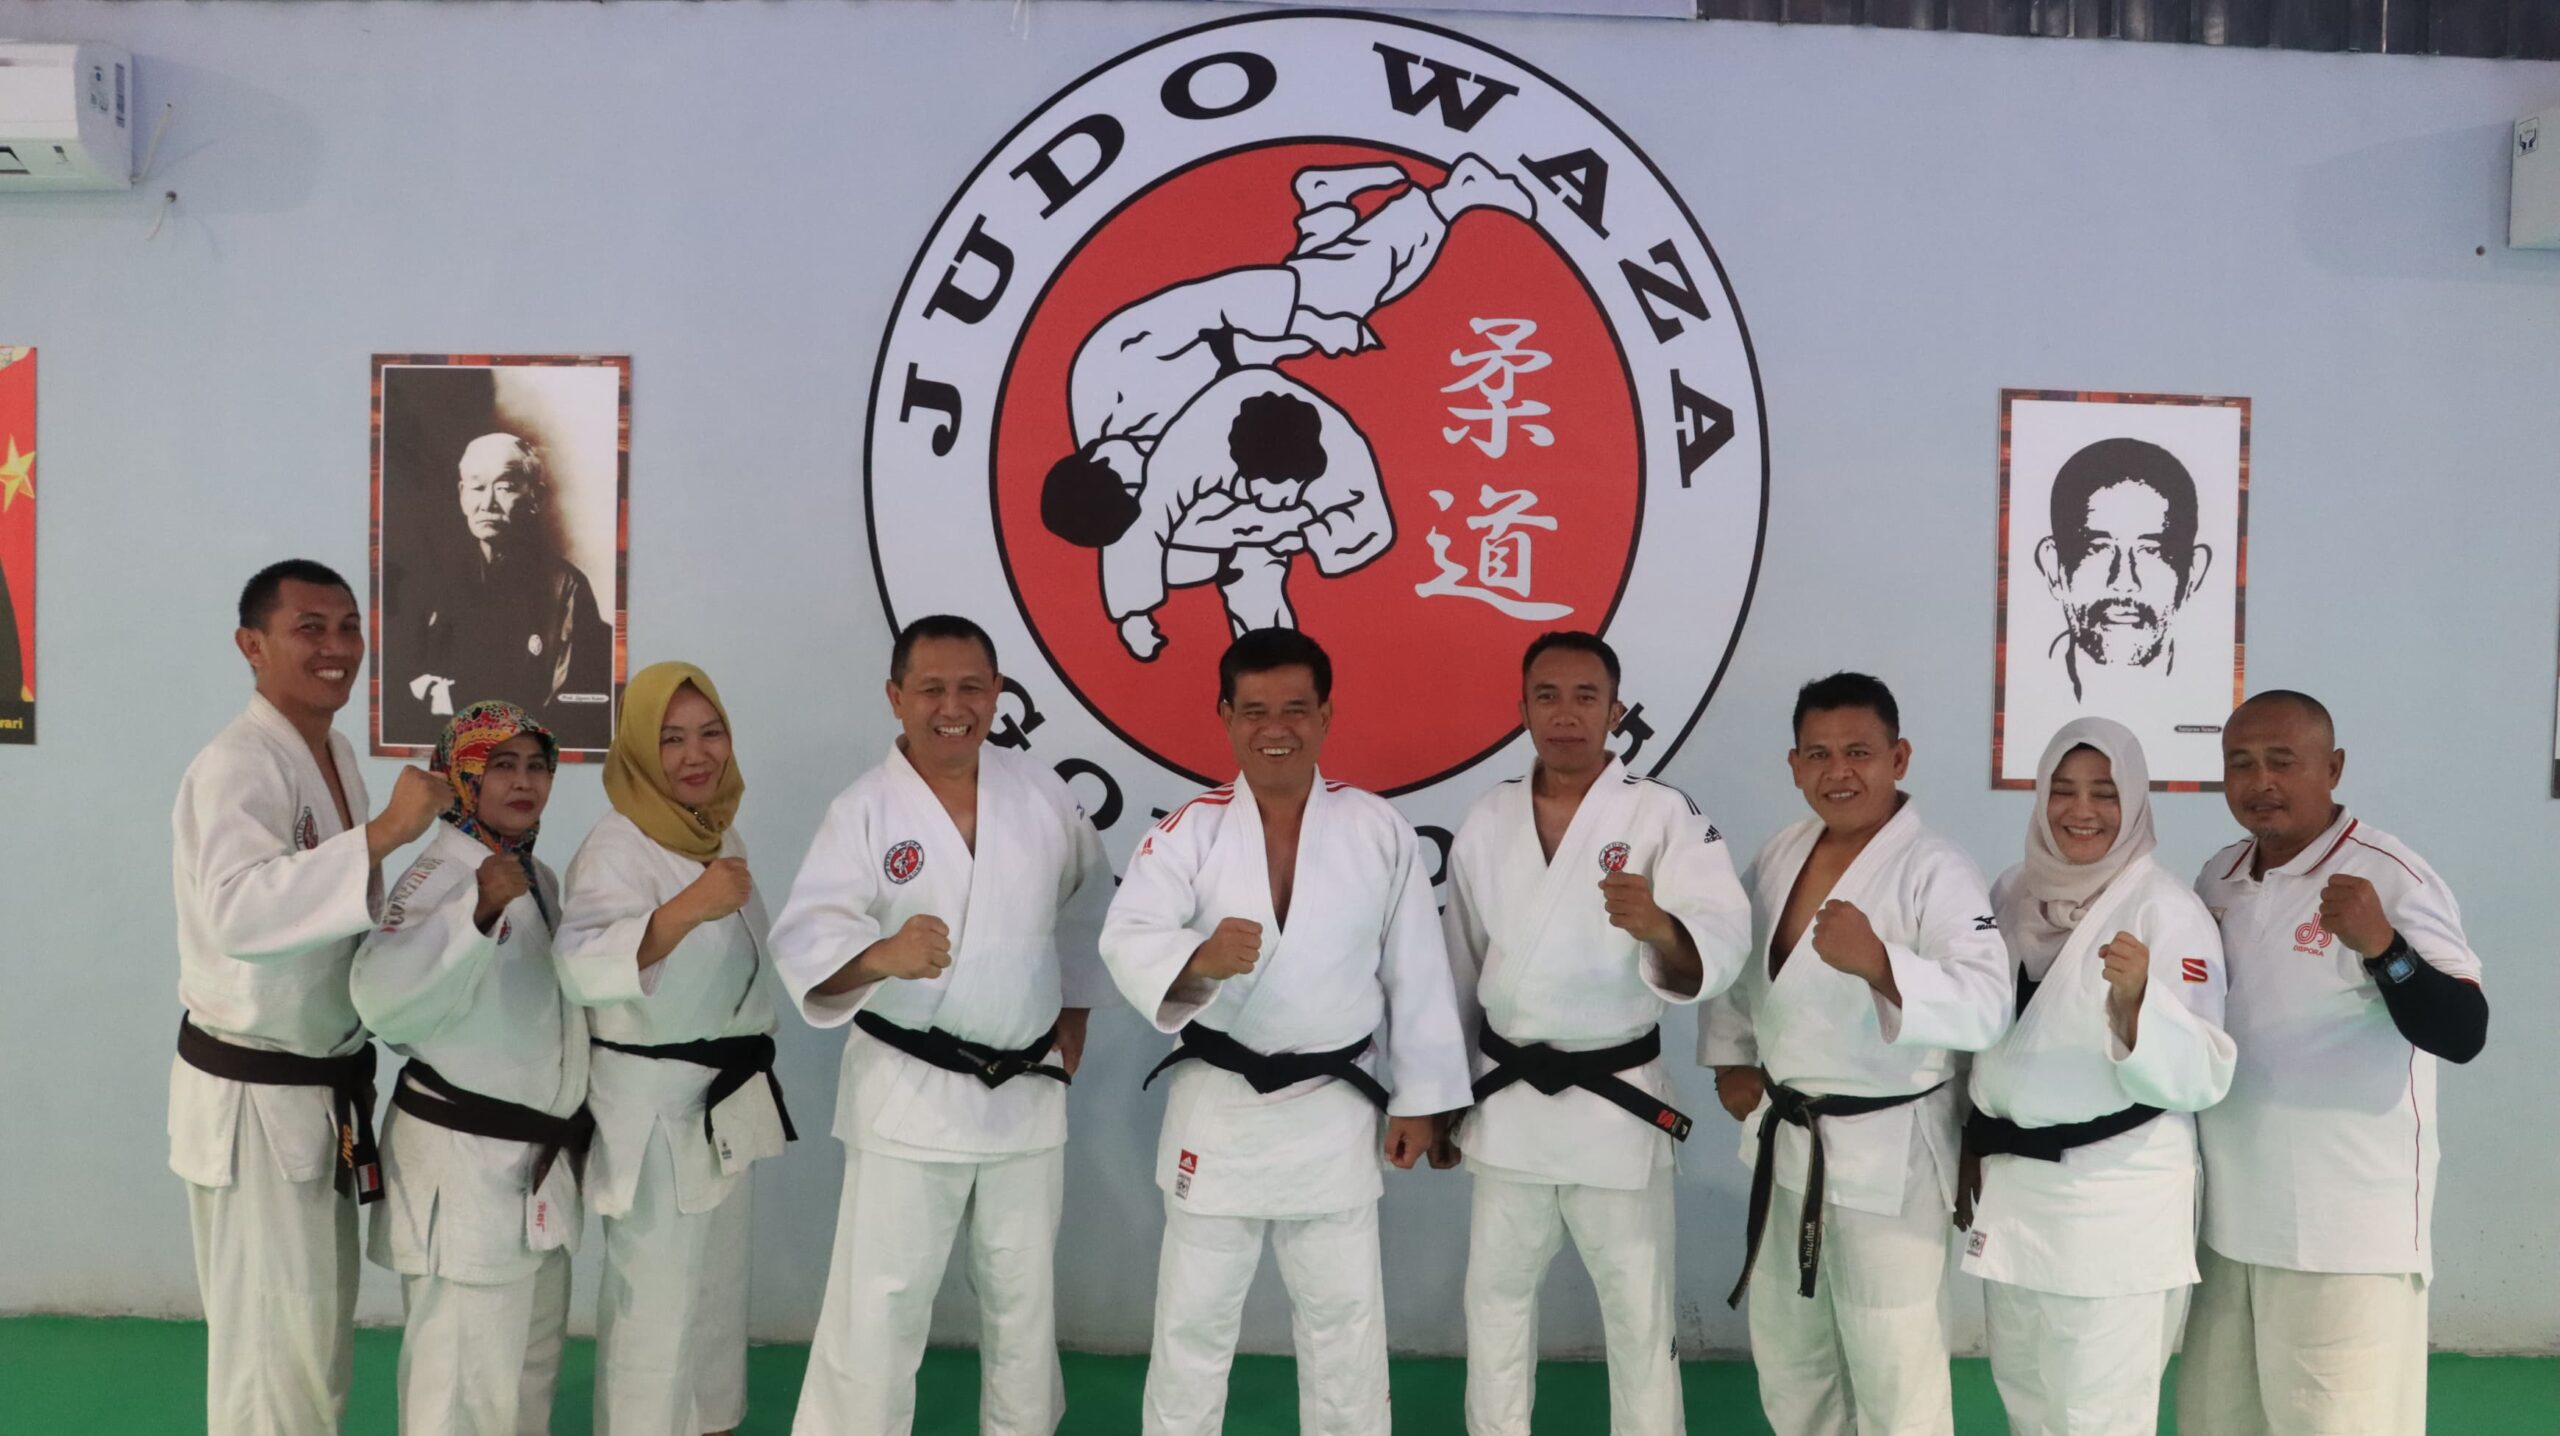 Marsdya TNI Kusworo, S.E., M.M Ka Basarnas Meresmikan Dojo Judo Waza Gombong, Kebumen